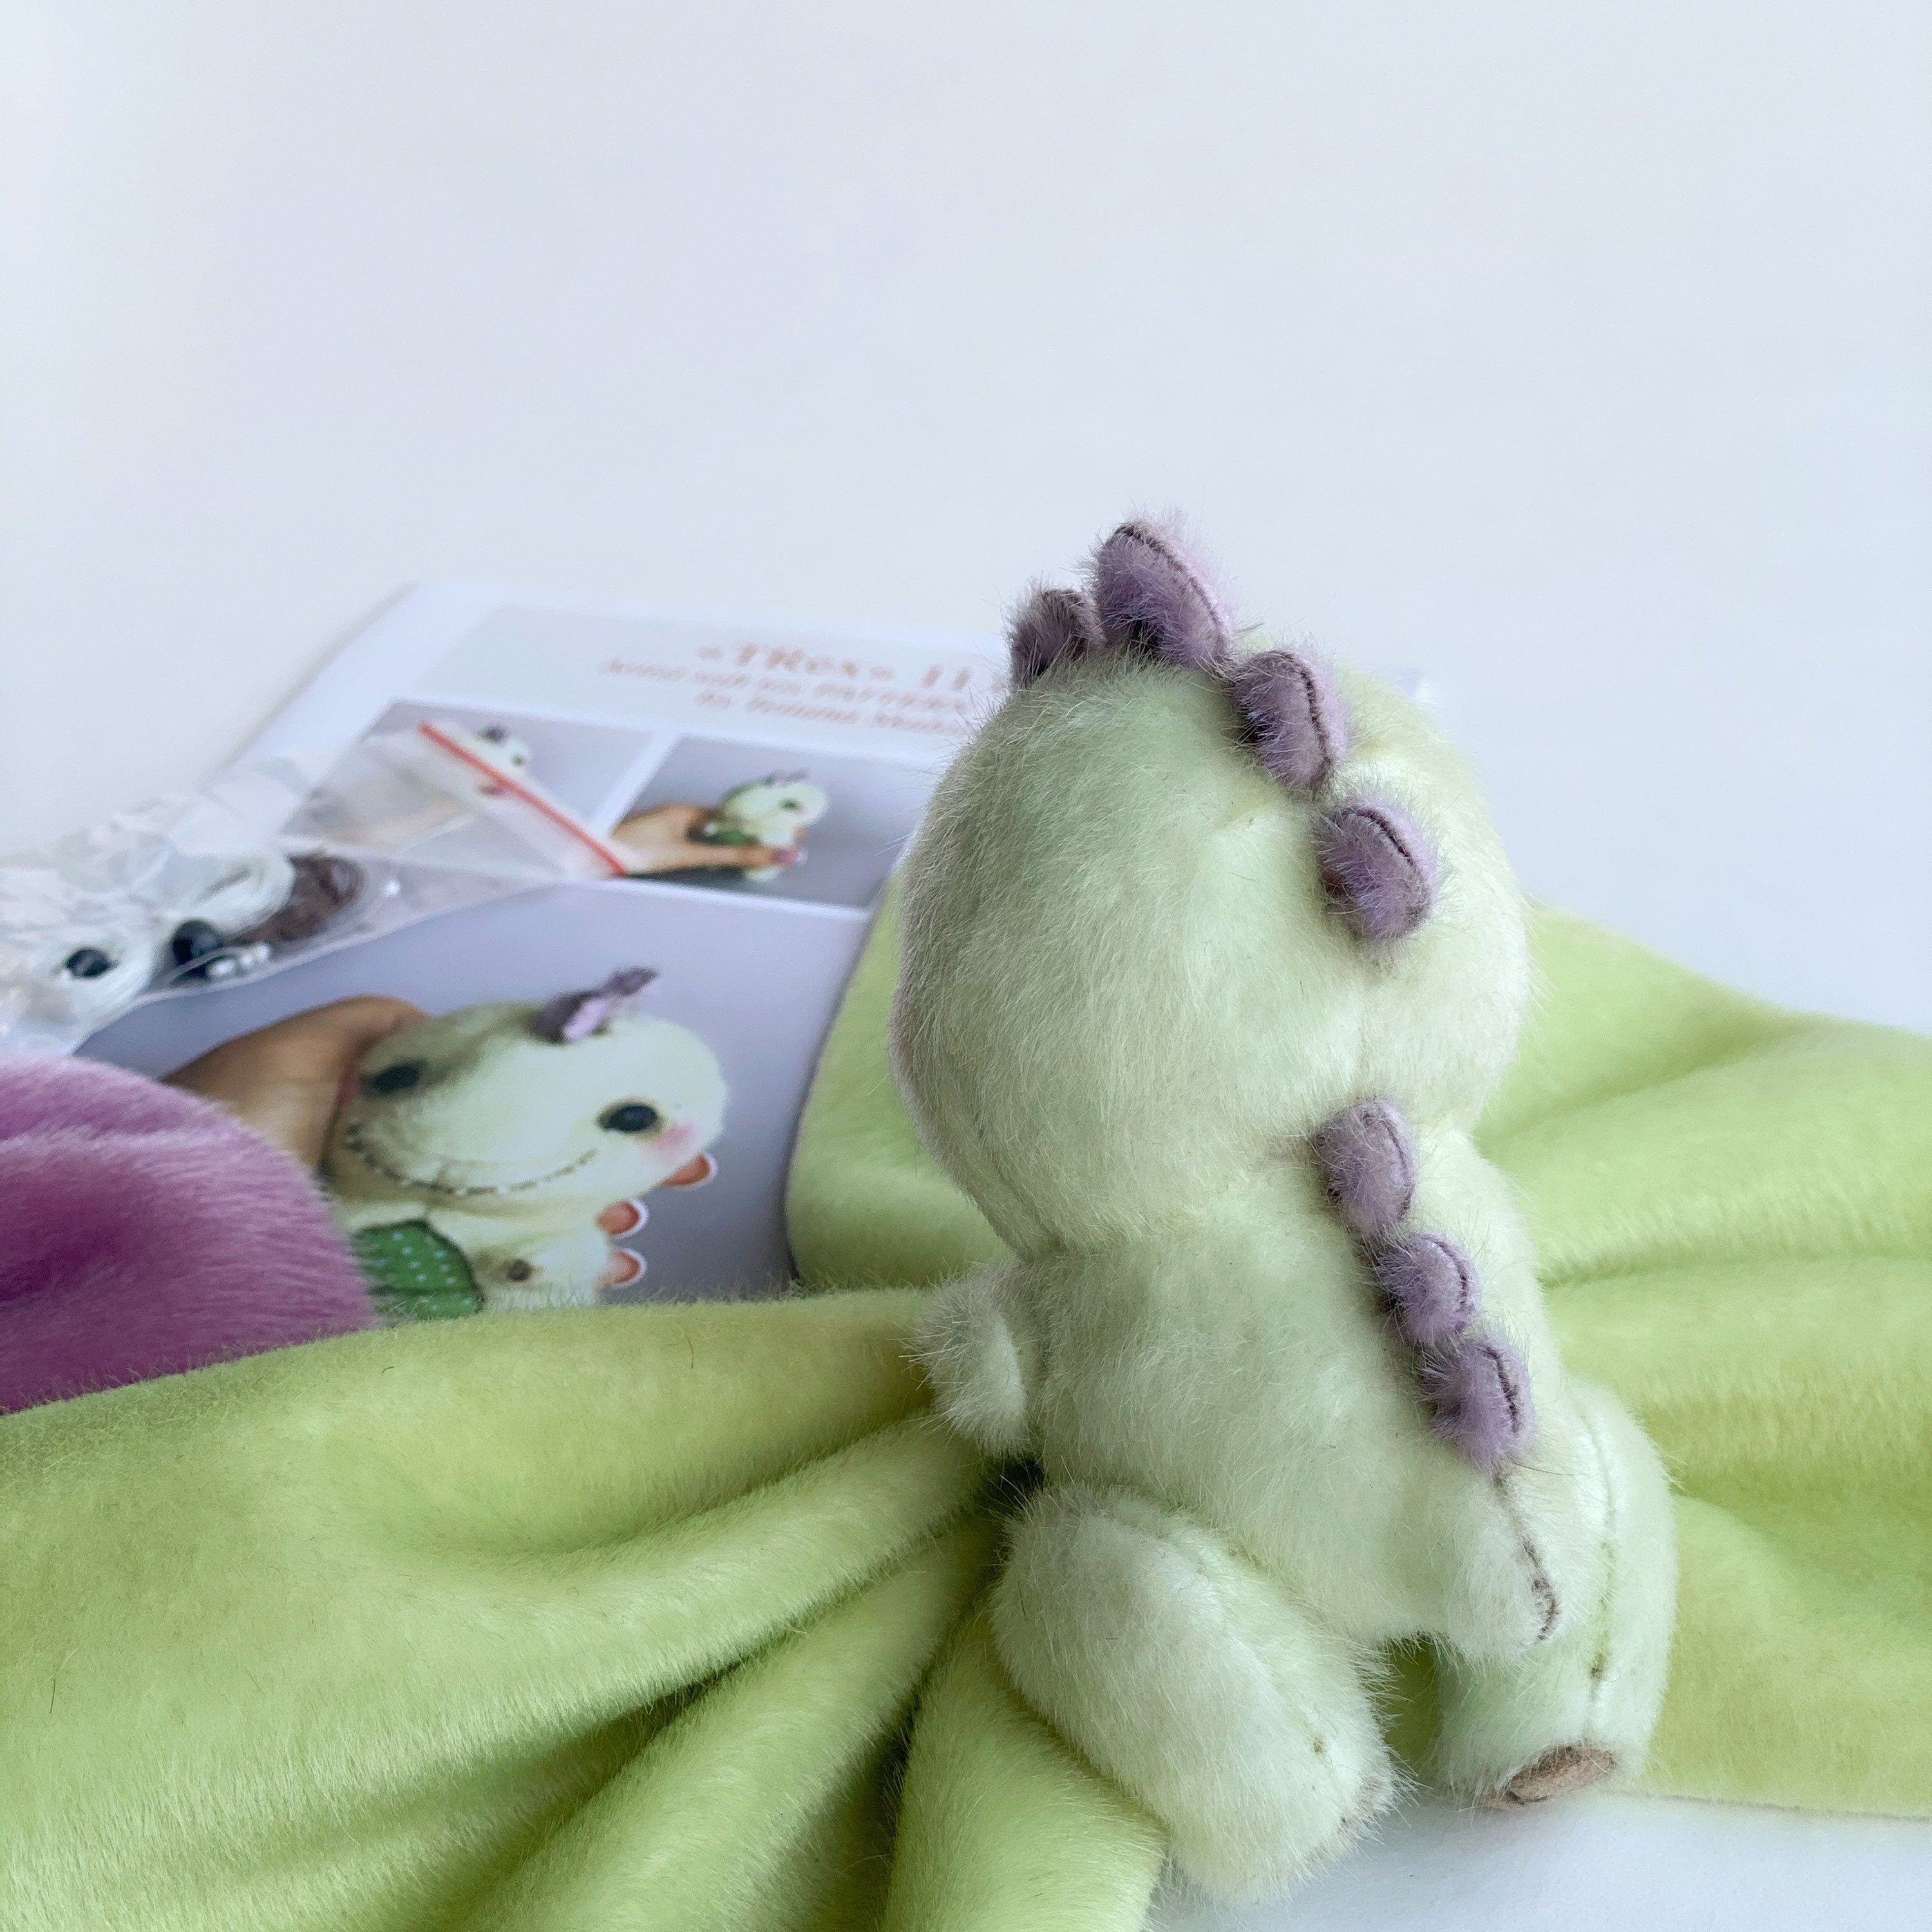 TRex dinosaur - Sewing KIT, Video tutorial DIY stuffed toy pattern, Xmas gift, Christmas tree decoration, softie plushie craft kit for adult